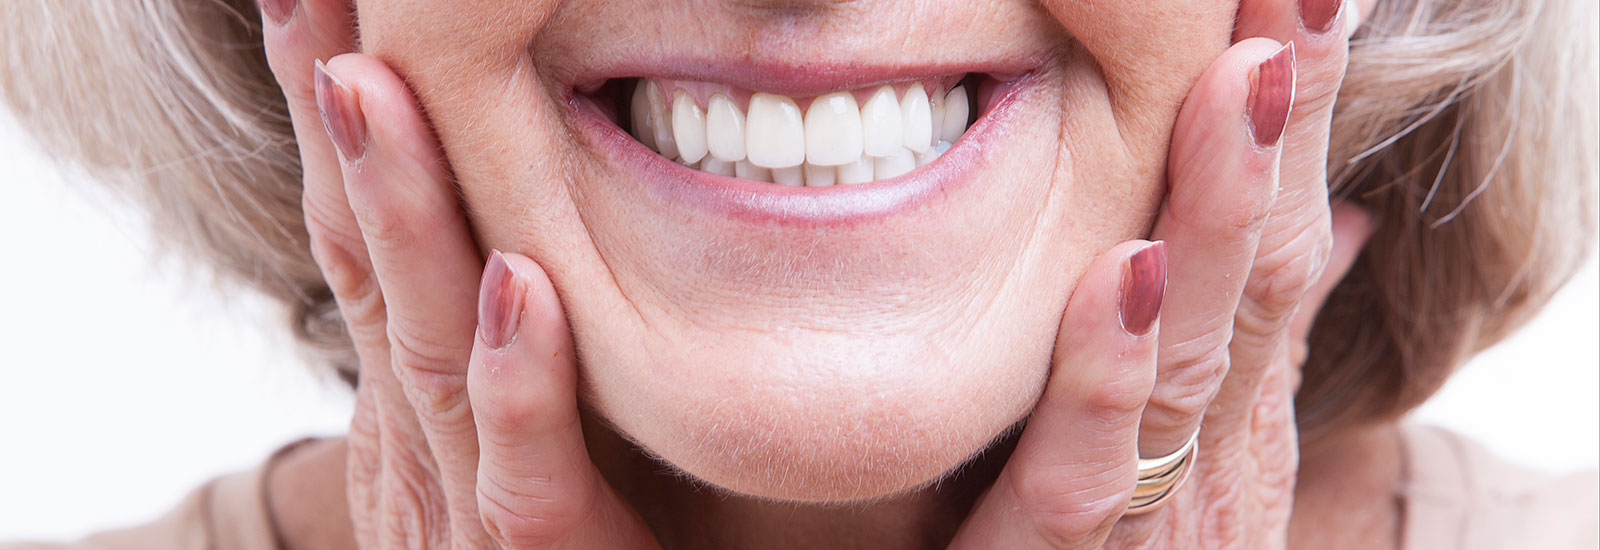 Elderly woman with dentures